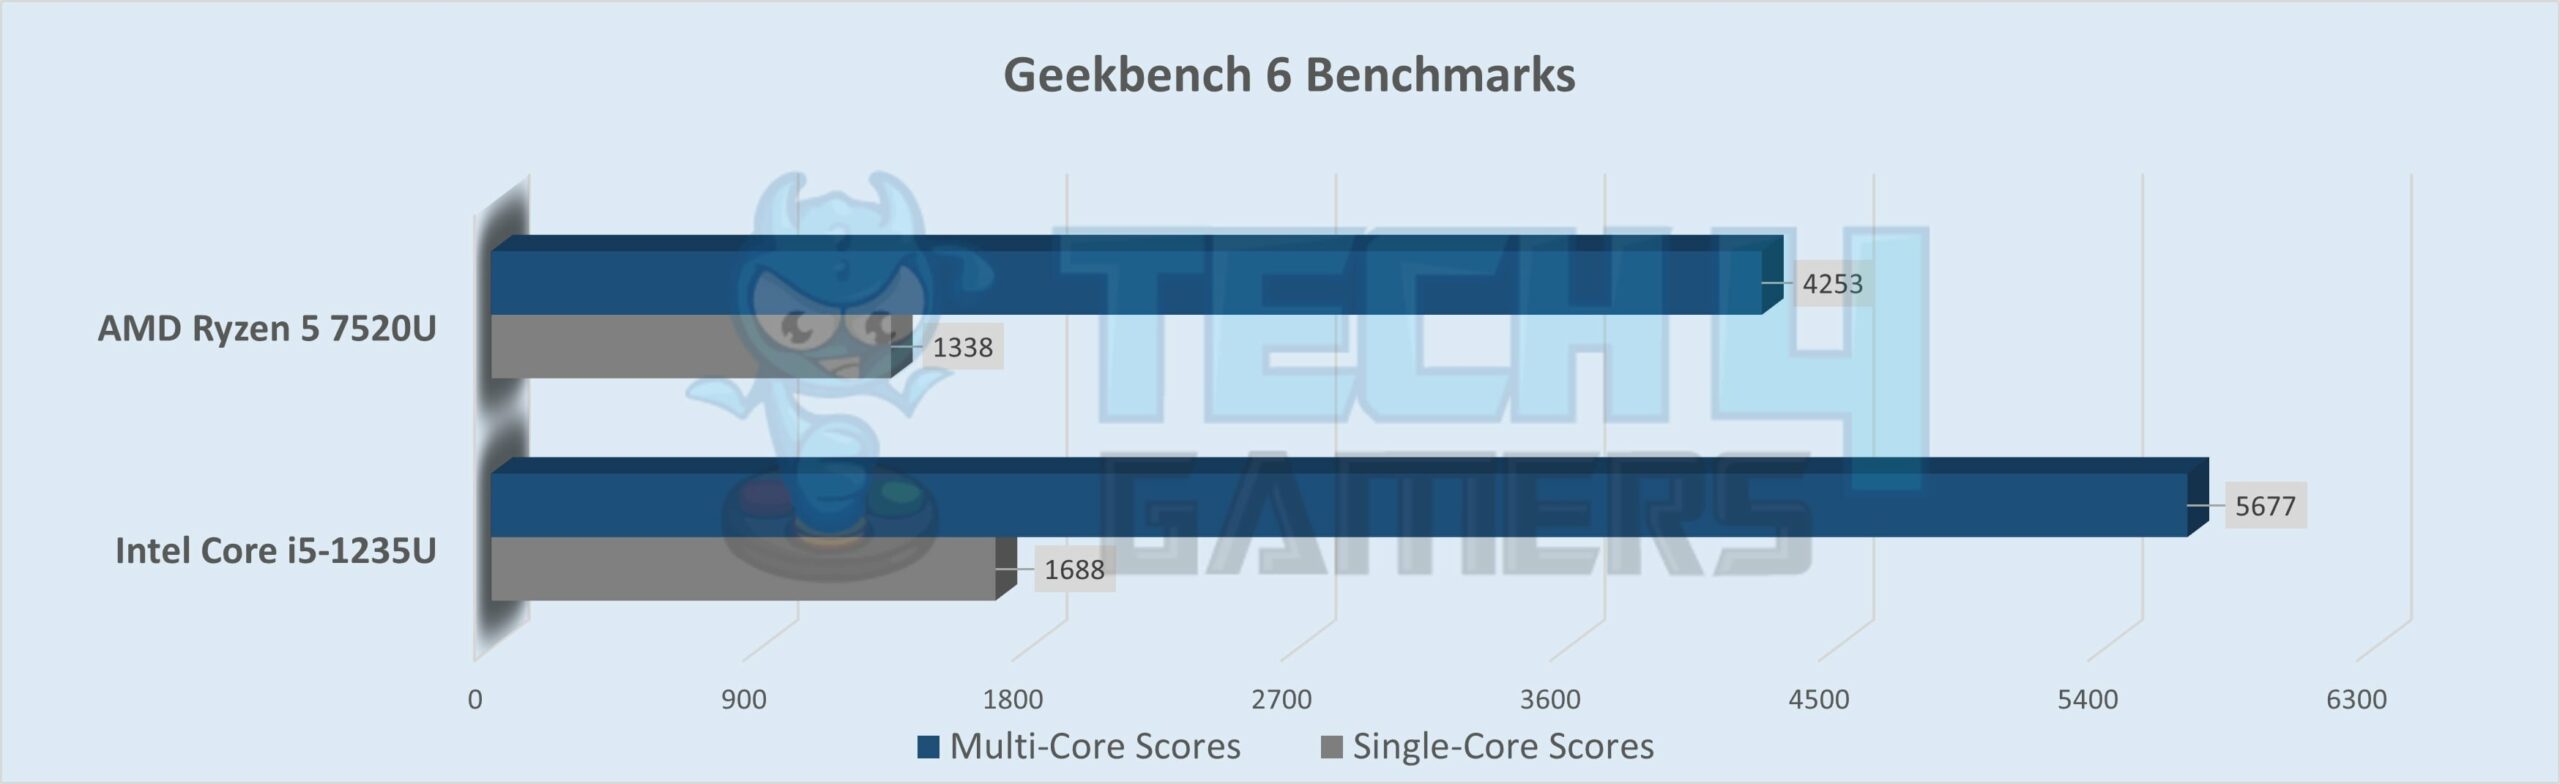 Geekbench 6 Benchmarks